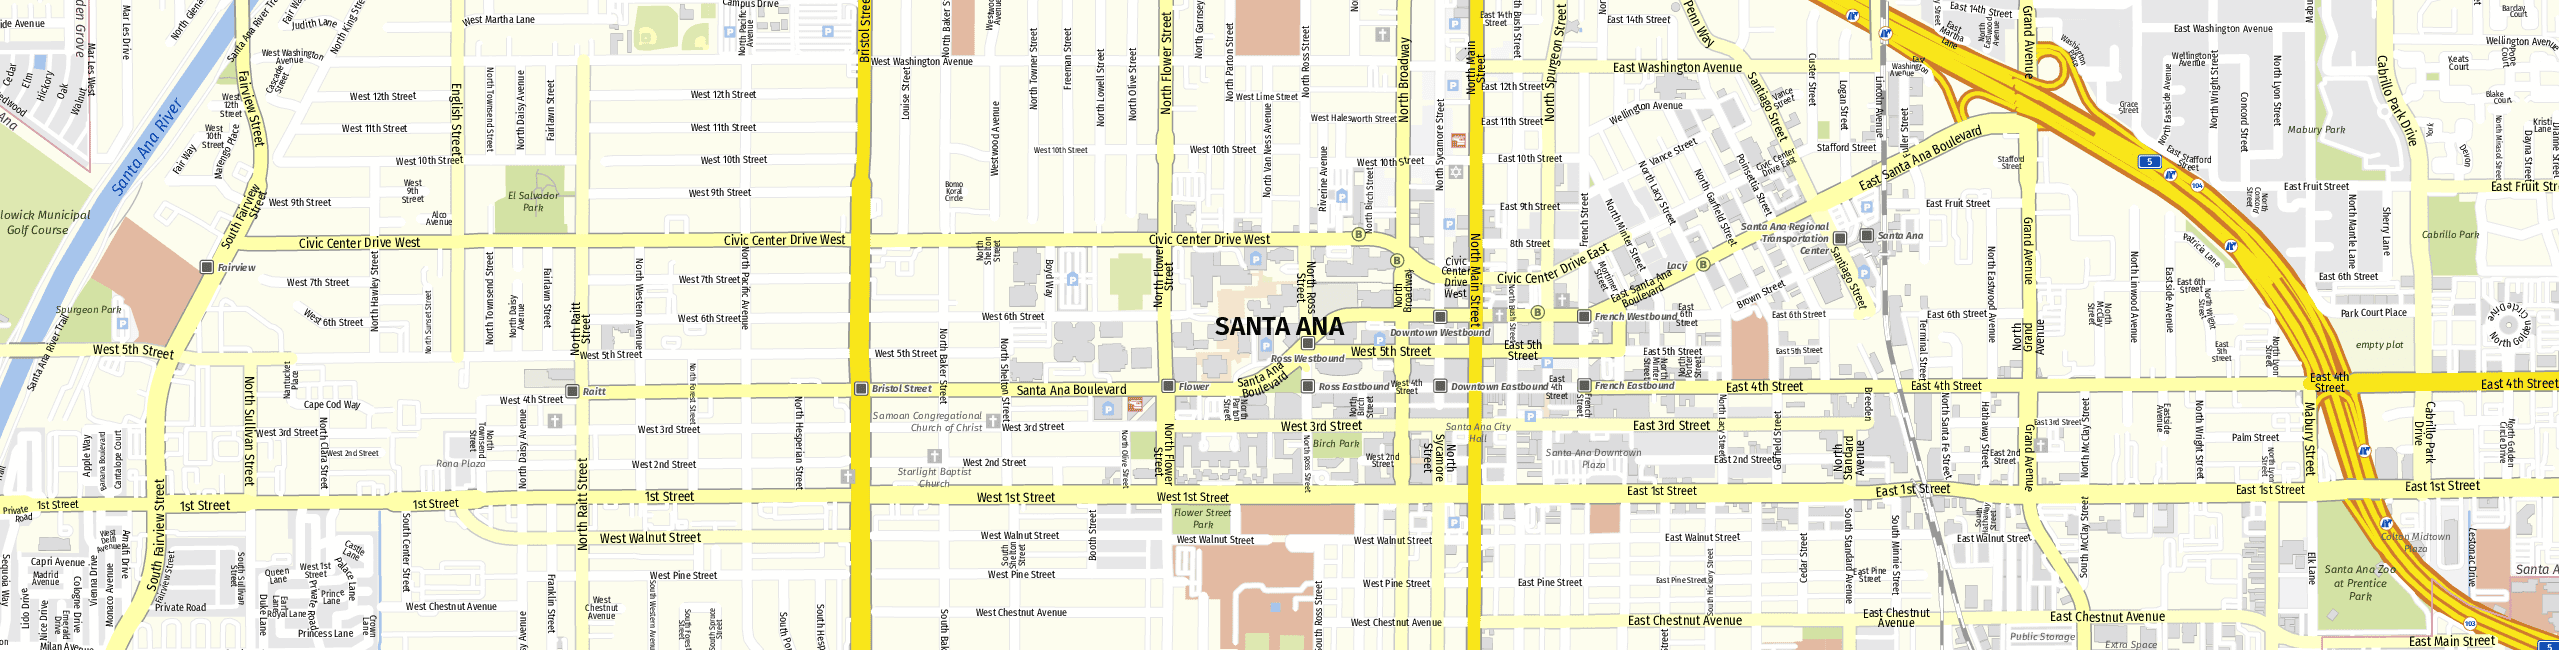 Stadtplan Santa Ana zum Downloaden.